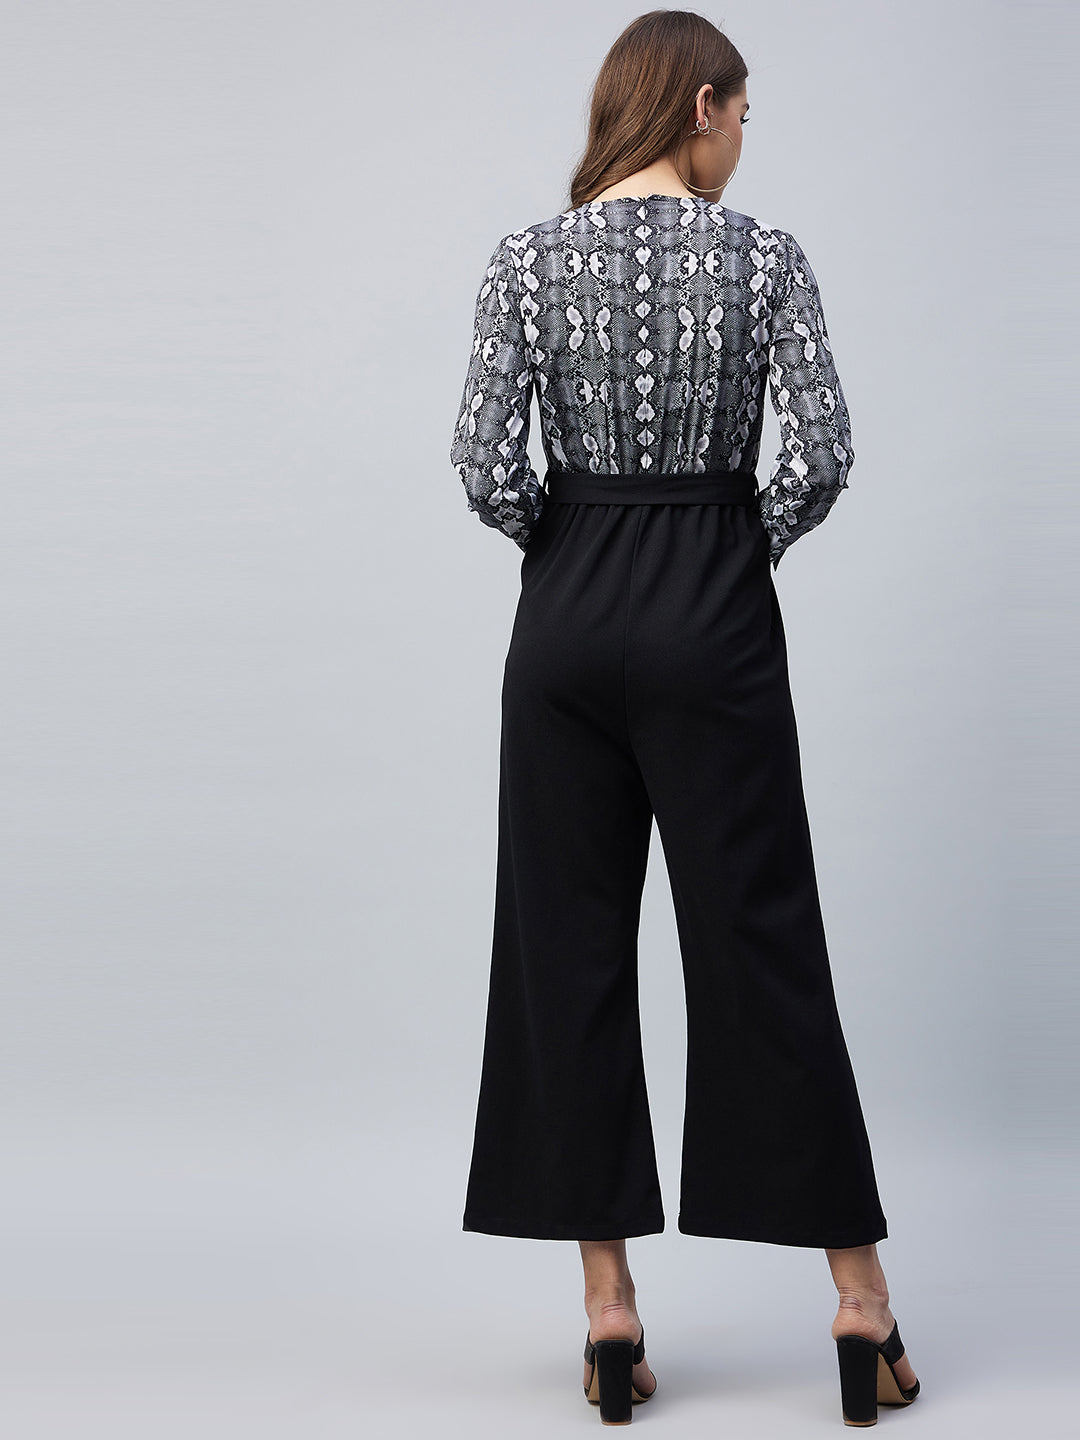 Women's Polyester Black Jumpsuit